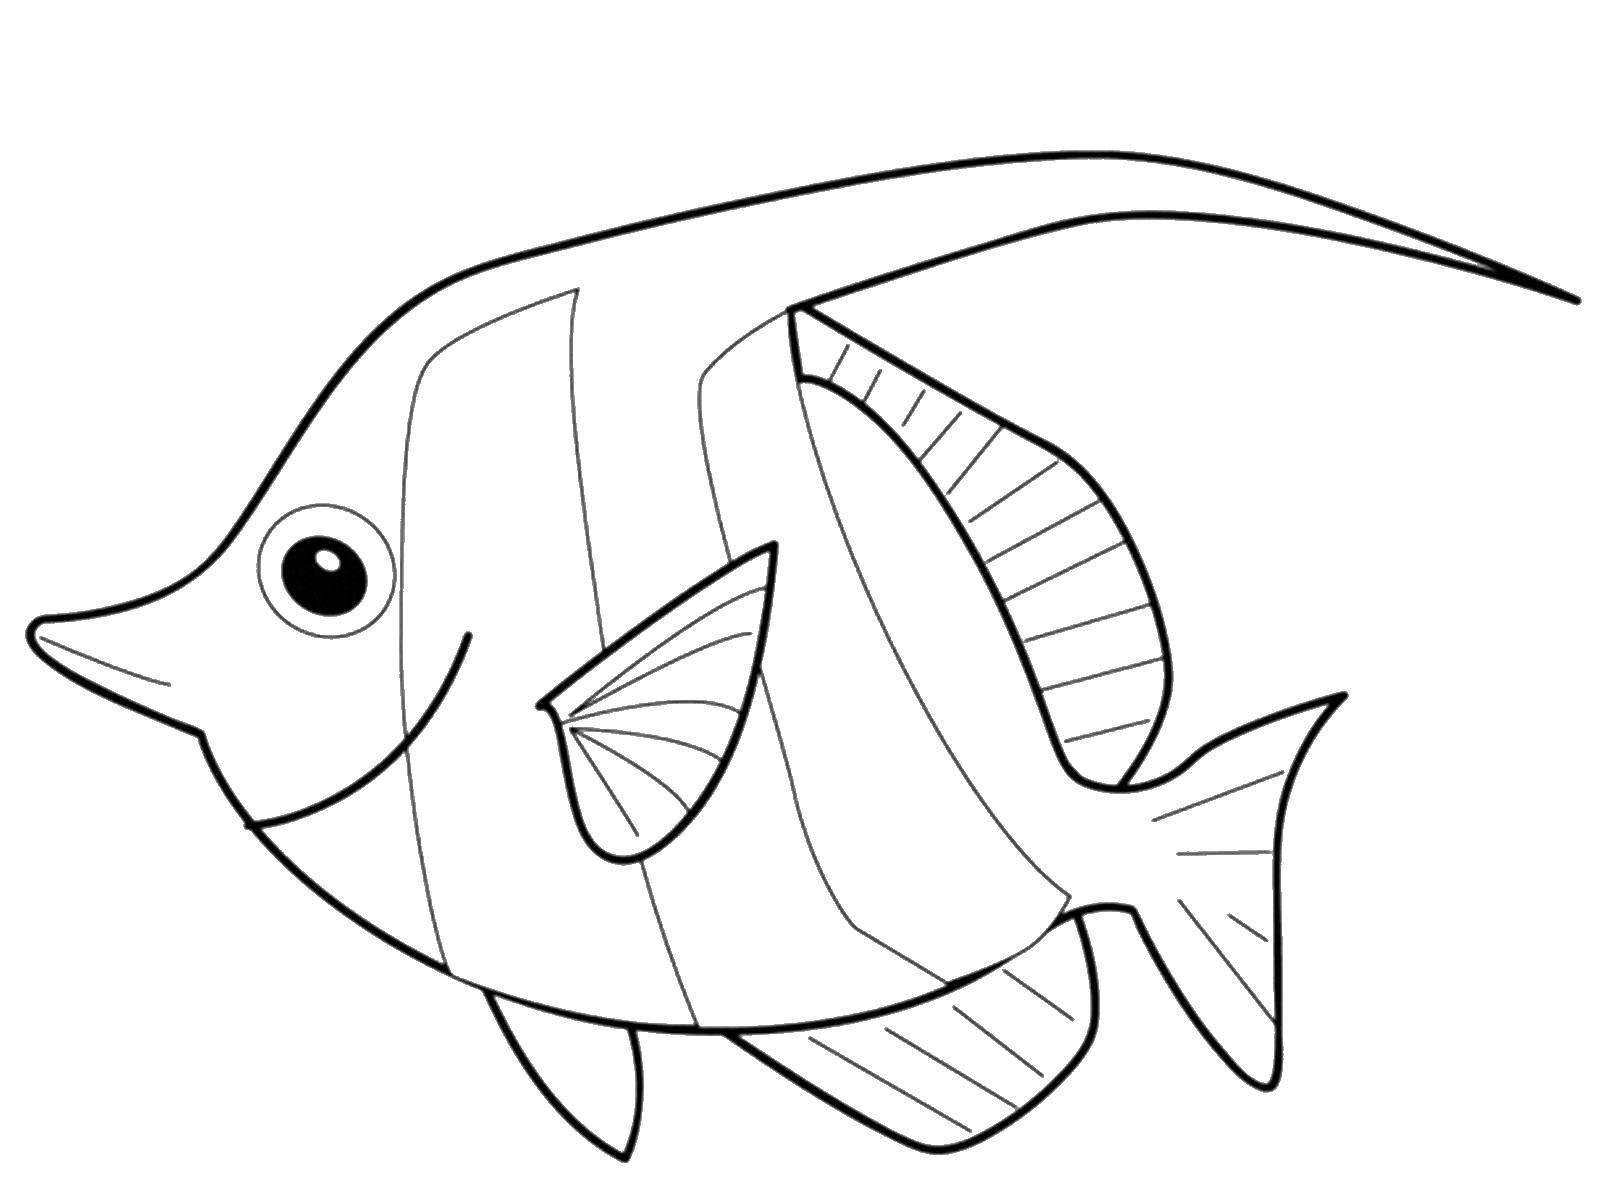 Название: Раскраска Рыба. Категория: рыбы. Теги: рыба.